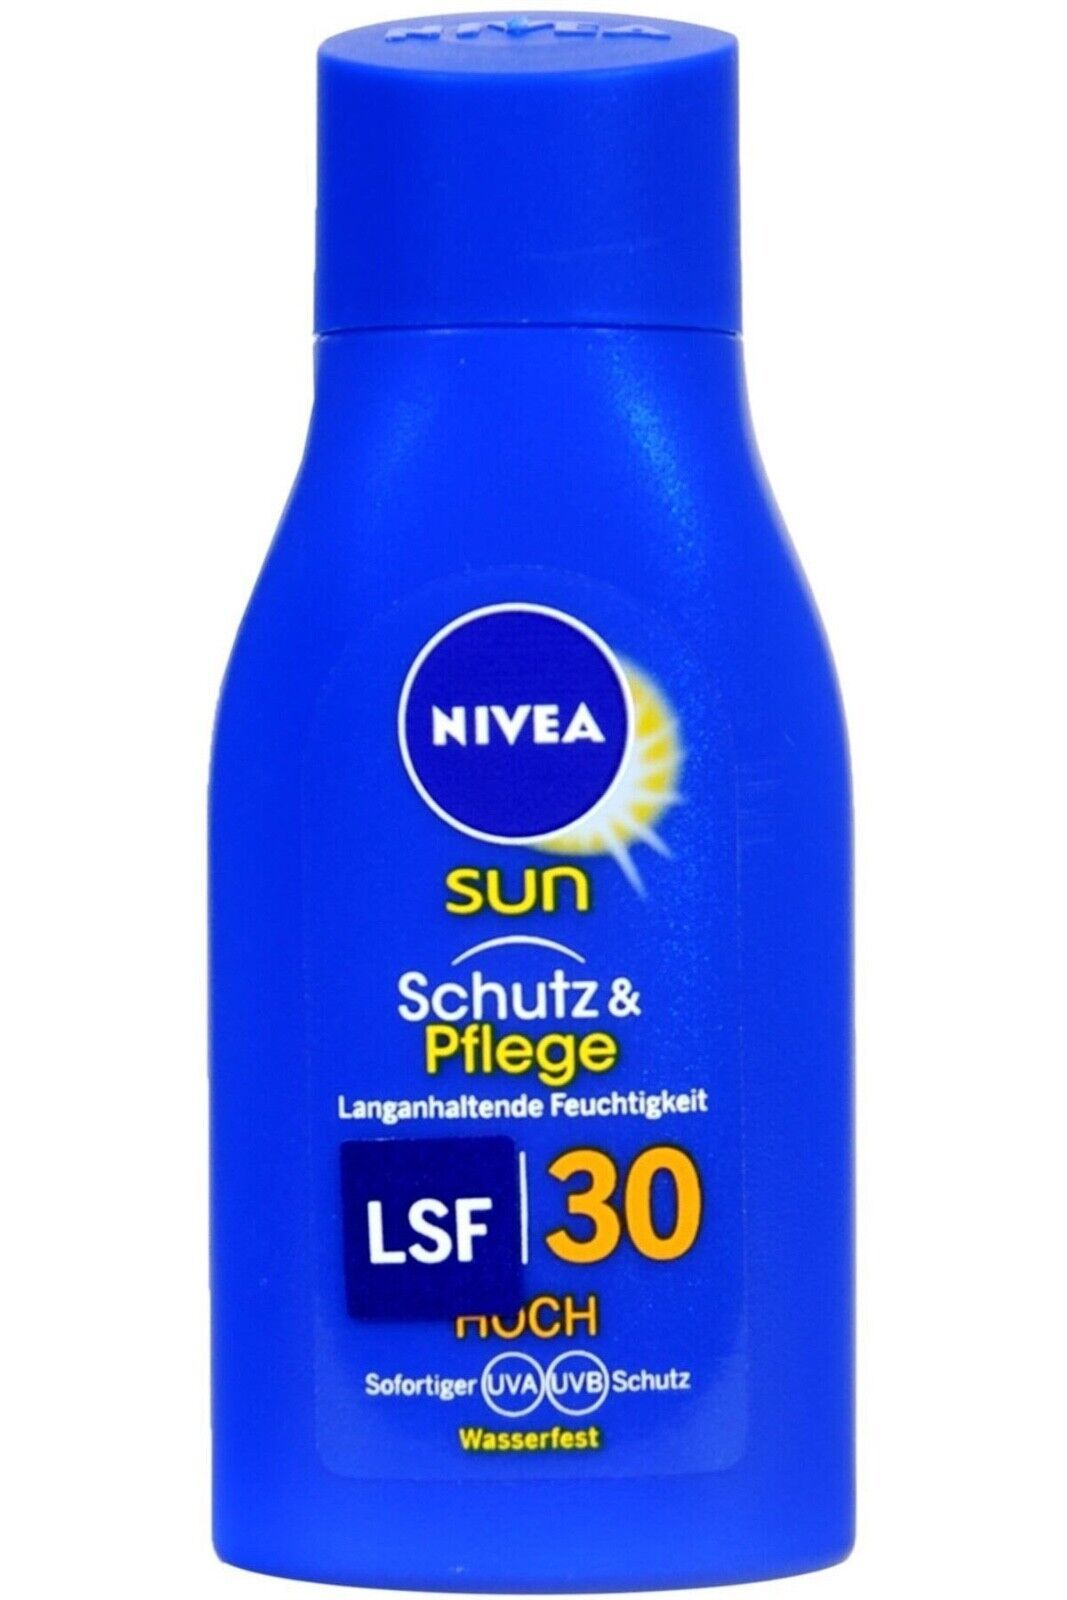 Nivea Sun Sunscreen Protect & Care SPF 30 30ml/1.01 fl oz Pocket Size FREE SHIP - $5.93